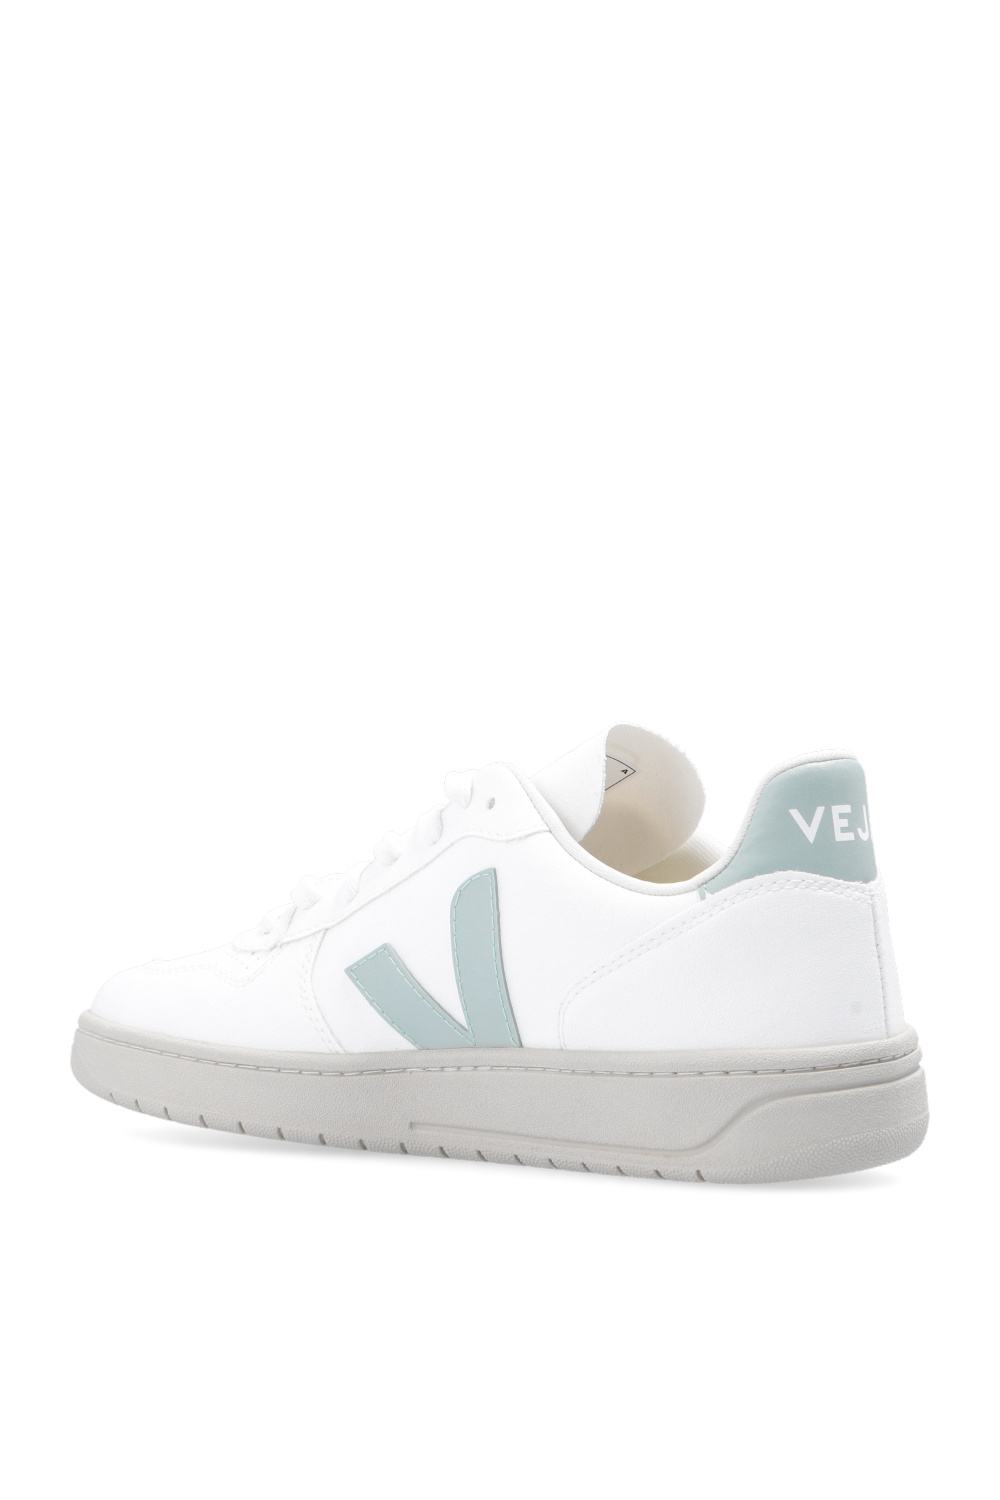 Veja 'V-10 C.W.L.' sneakers | Women's Shoes | Vitkac